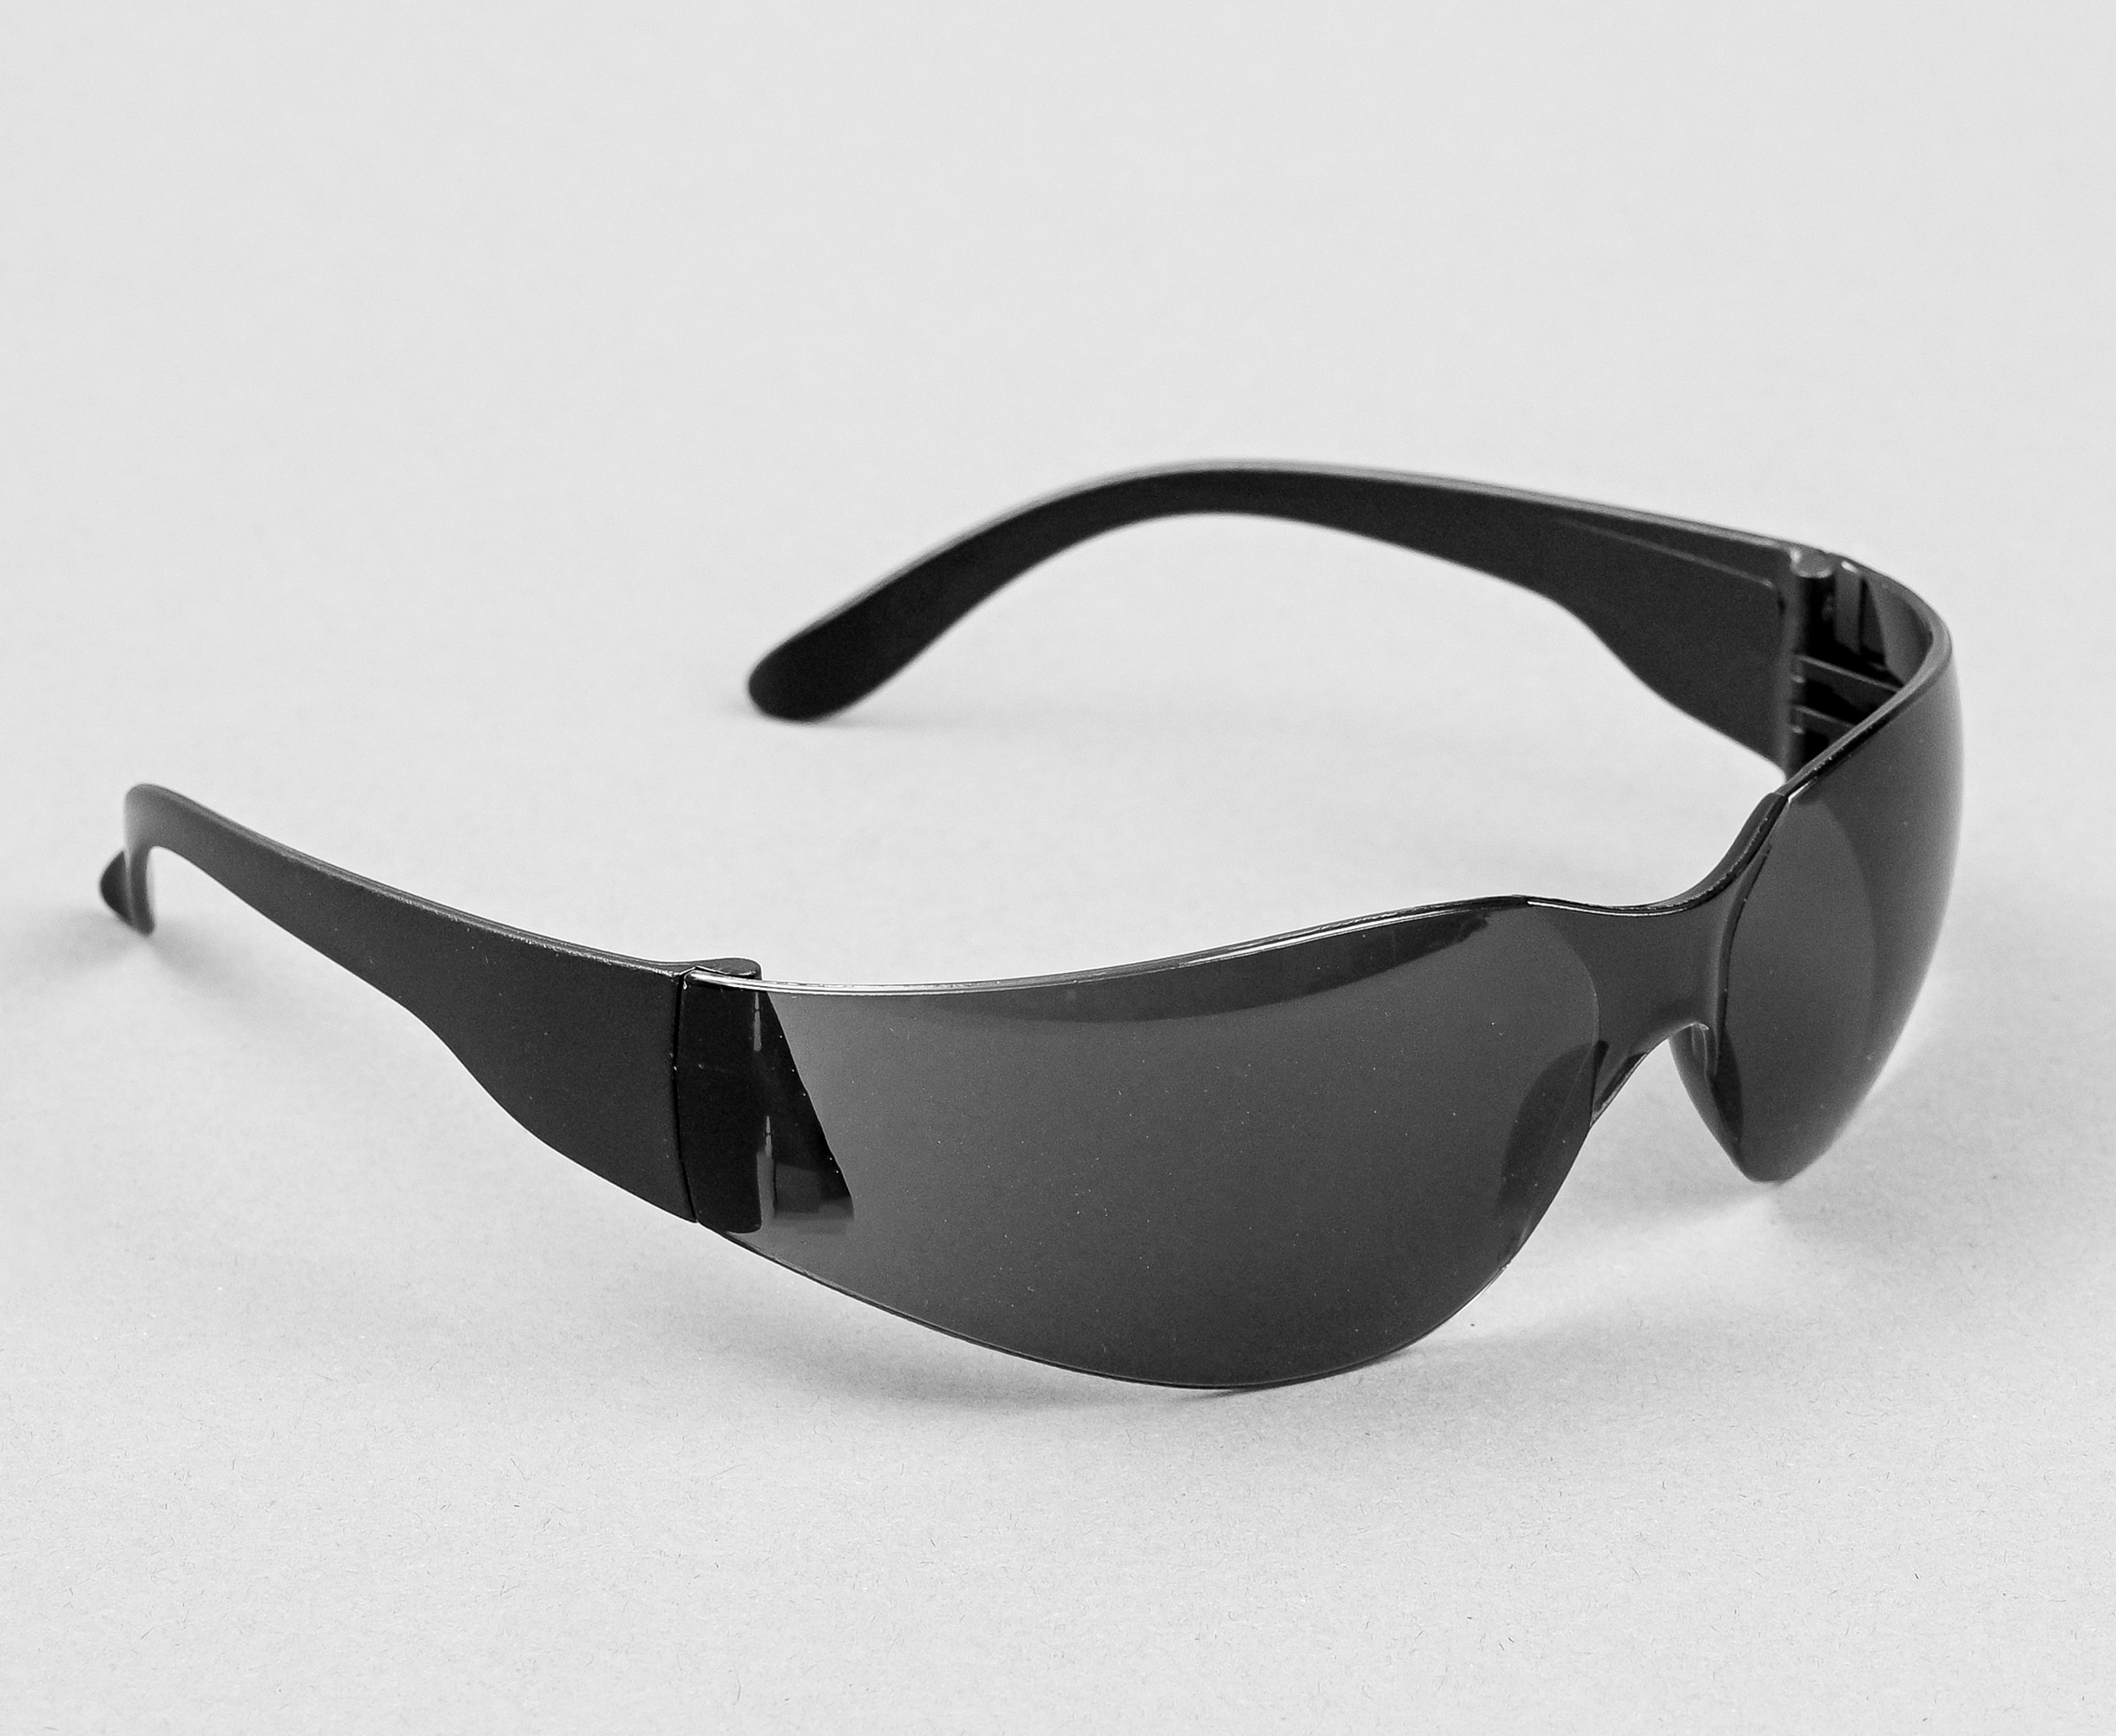 Vali Anti-Fog Safety Glasses, Scratch Resistant Glasses